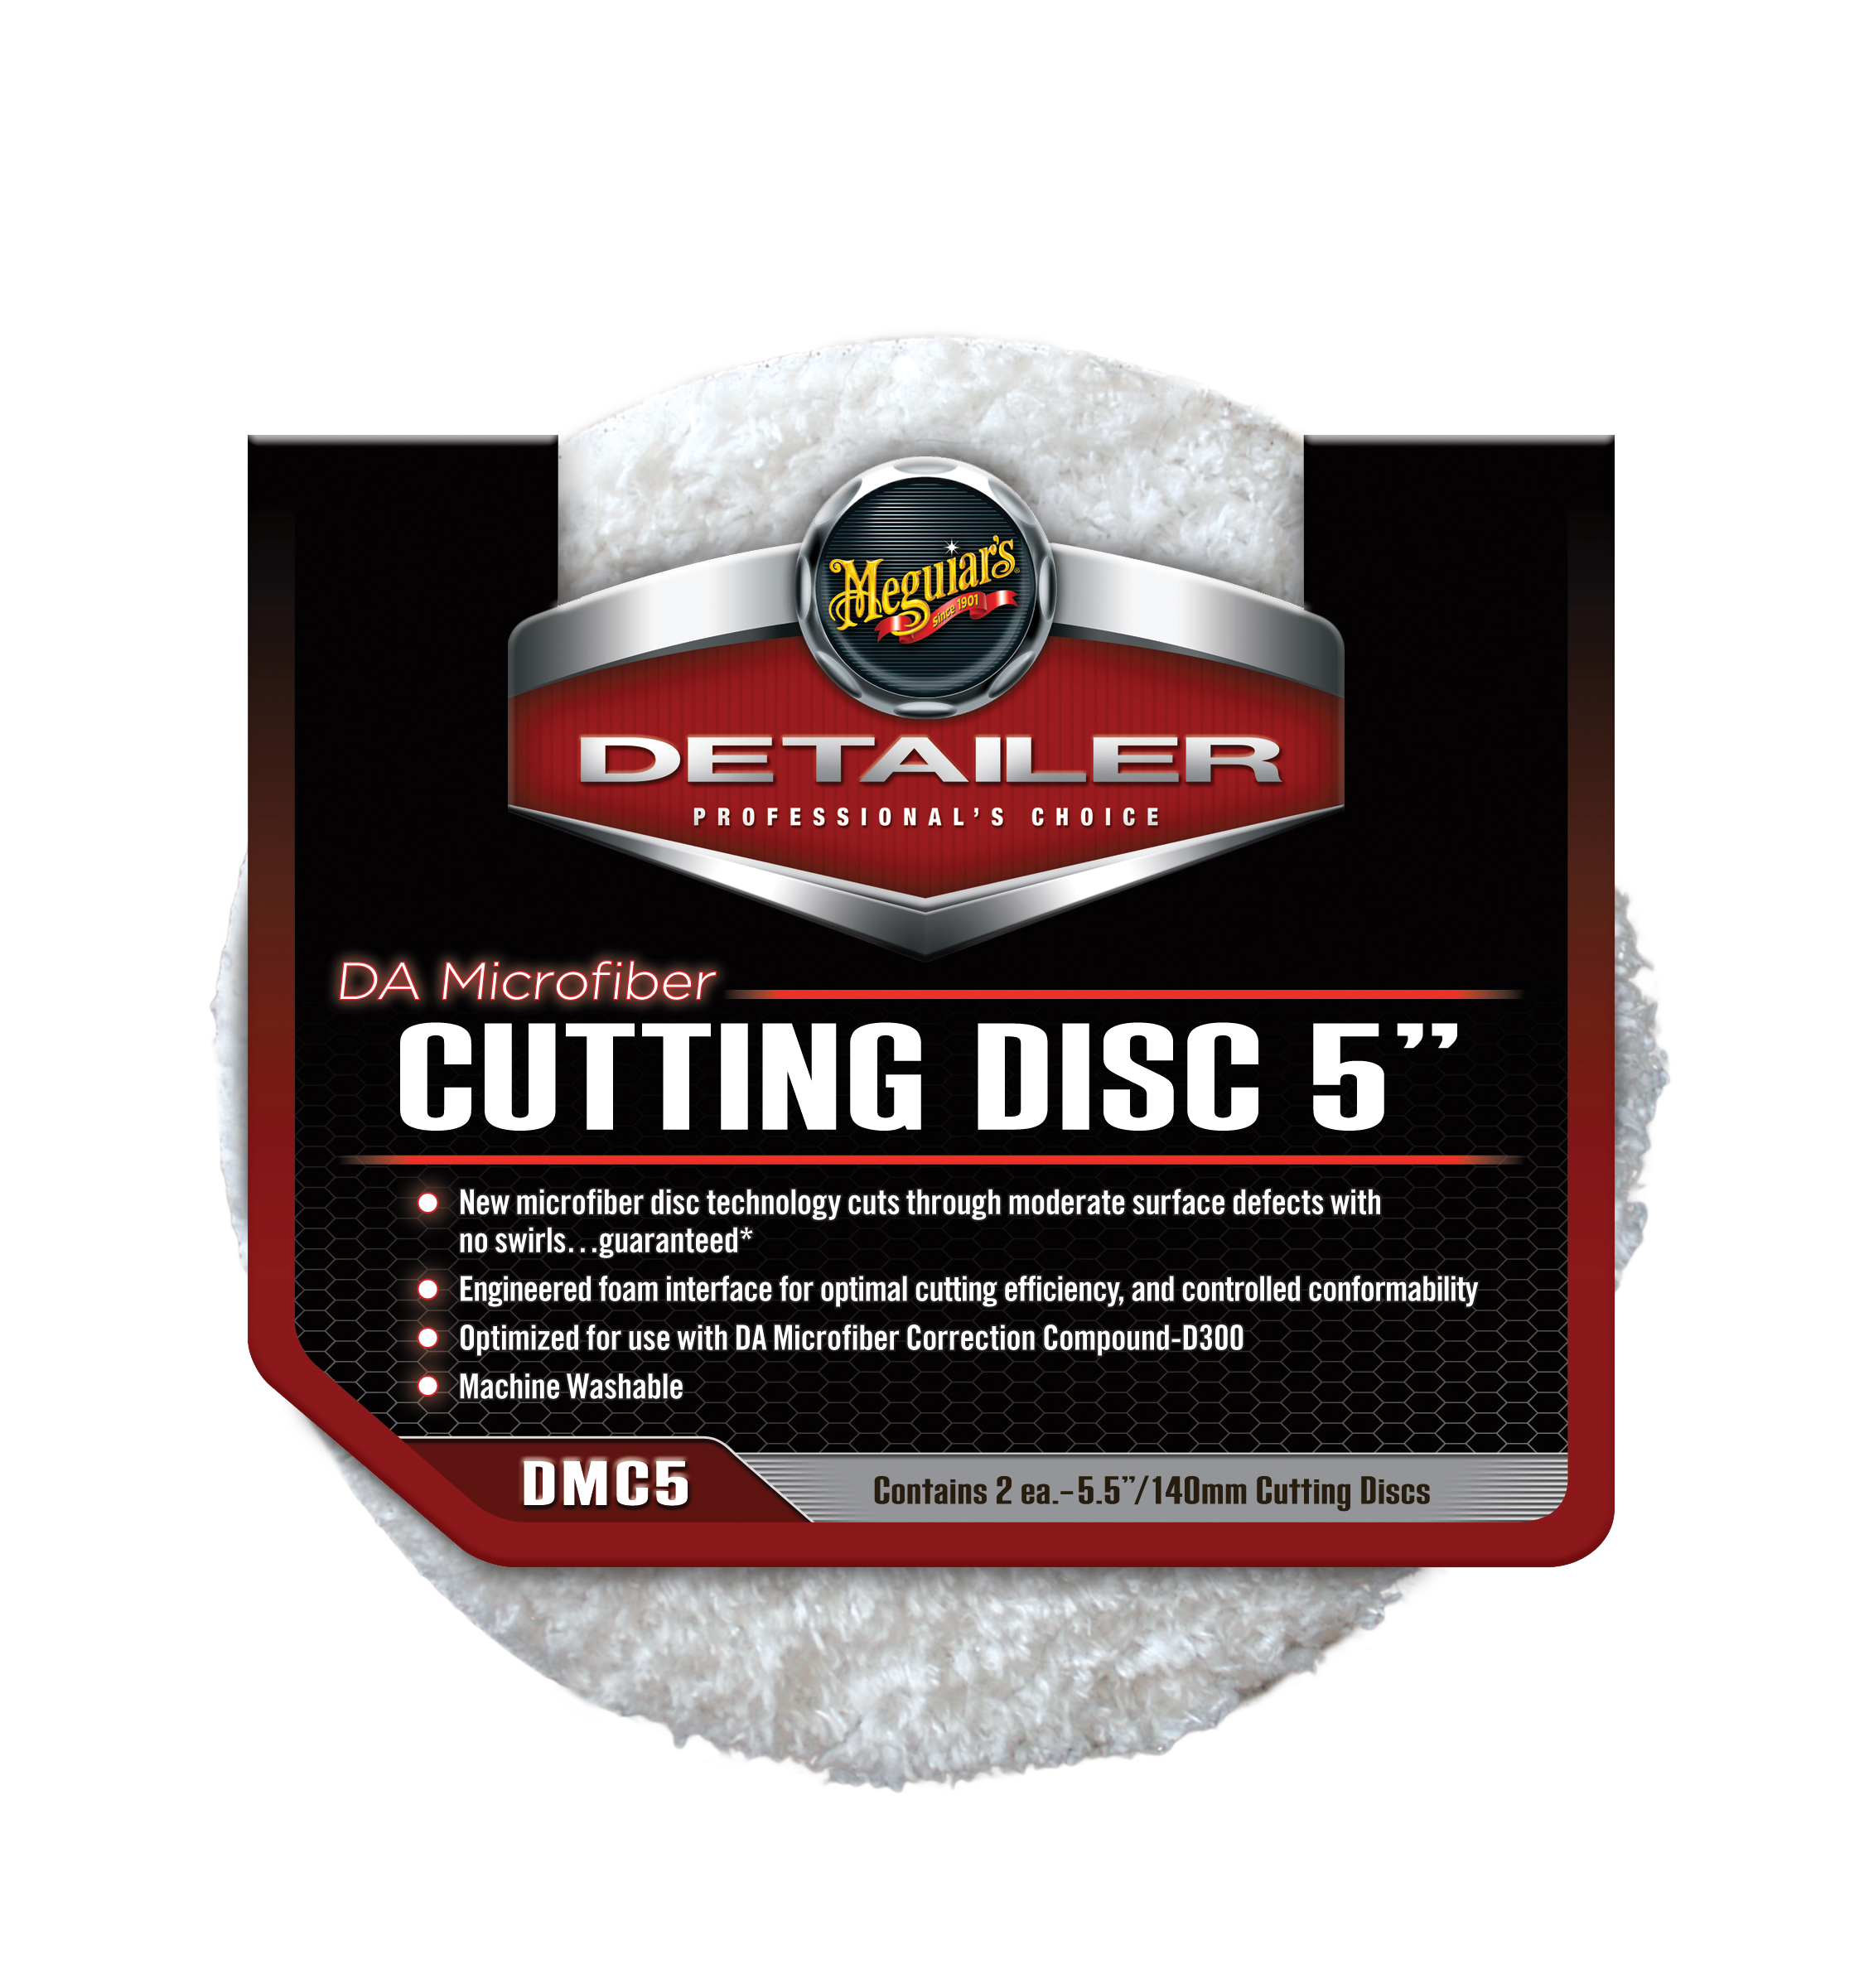 Bonete Microfibra Corte Cutting Disc 5 (DMC5) Meguiar’s